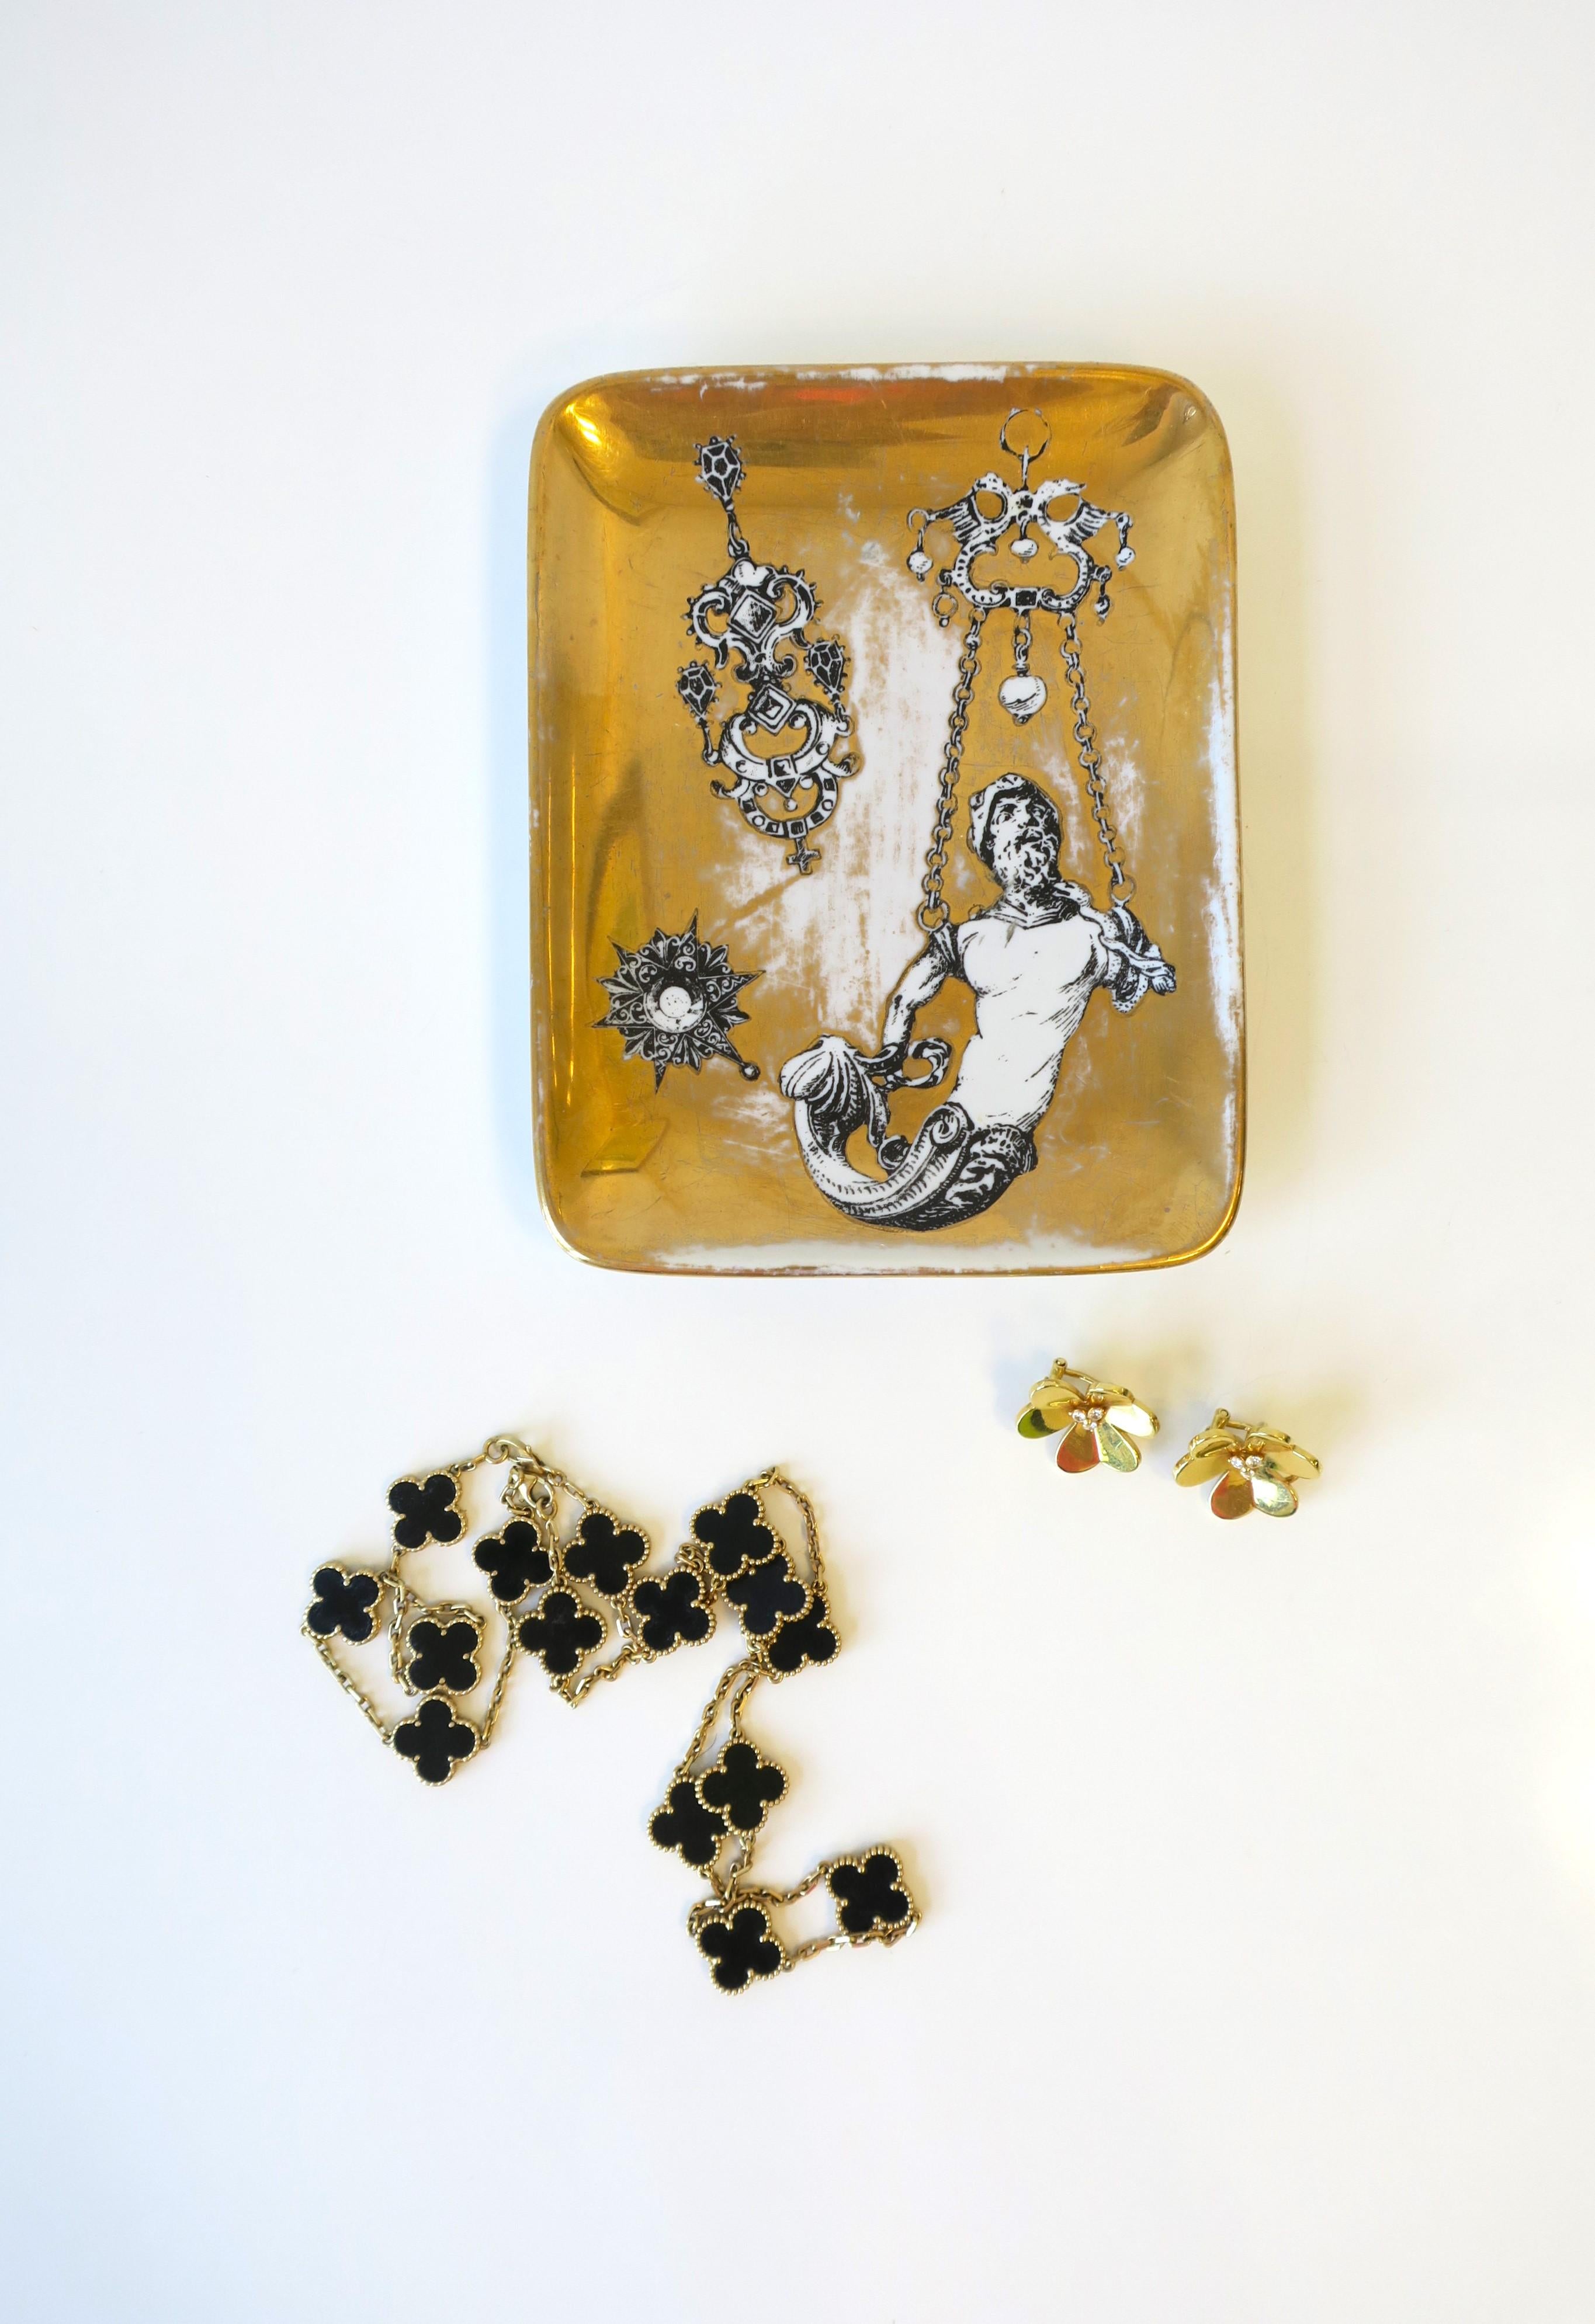 Italian Fornasetti Greco Roman Black and Gold Catchall Vide-Poche Jewelry Dish Tray For Sale